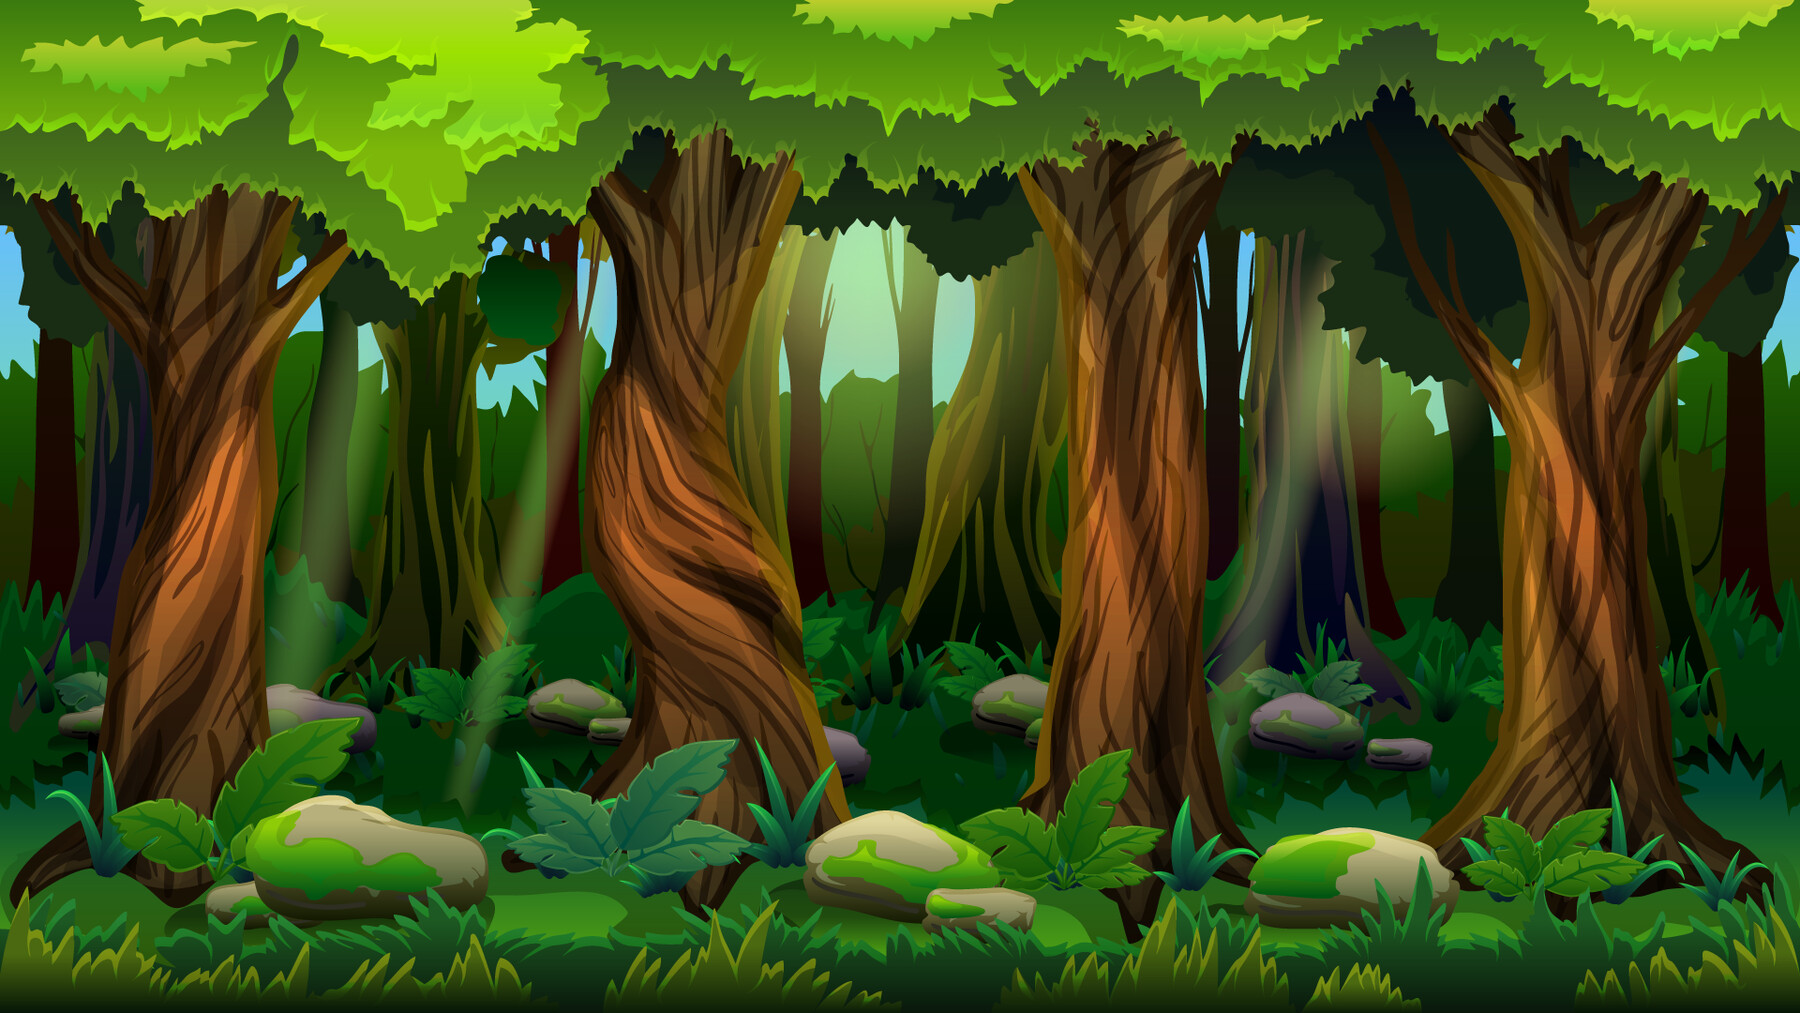 Игра приключенческая про лес. Игра приключения Forest and. Forest Adventure download. Forest Adventure pictures for Laptop. Adventure forest